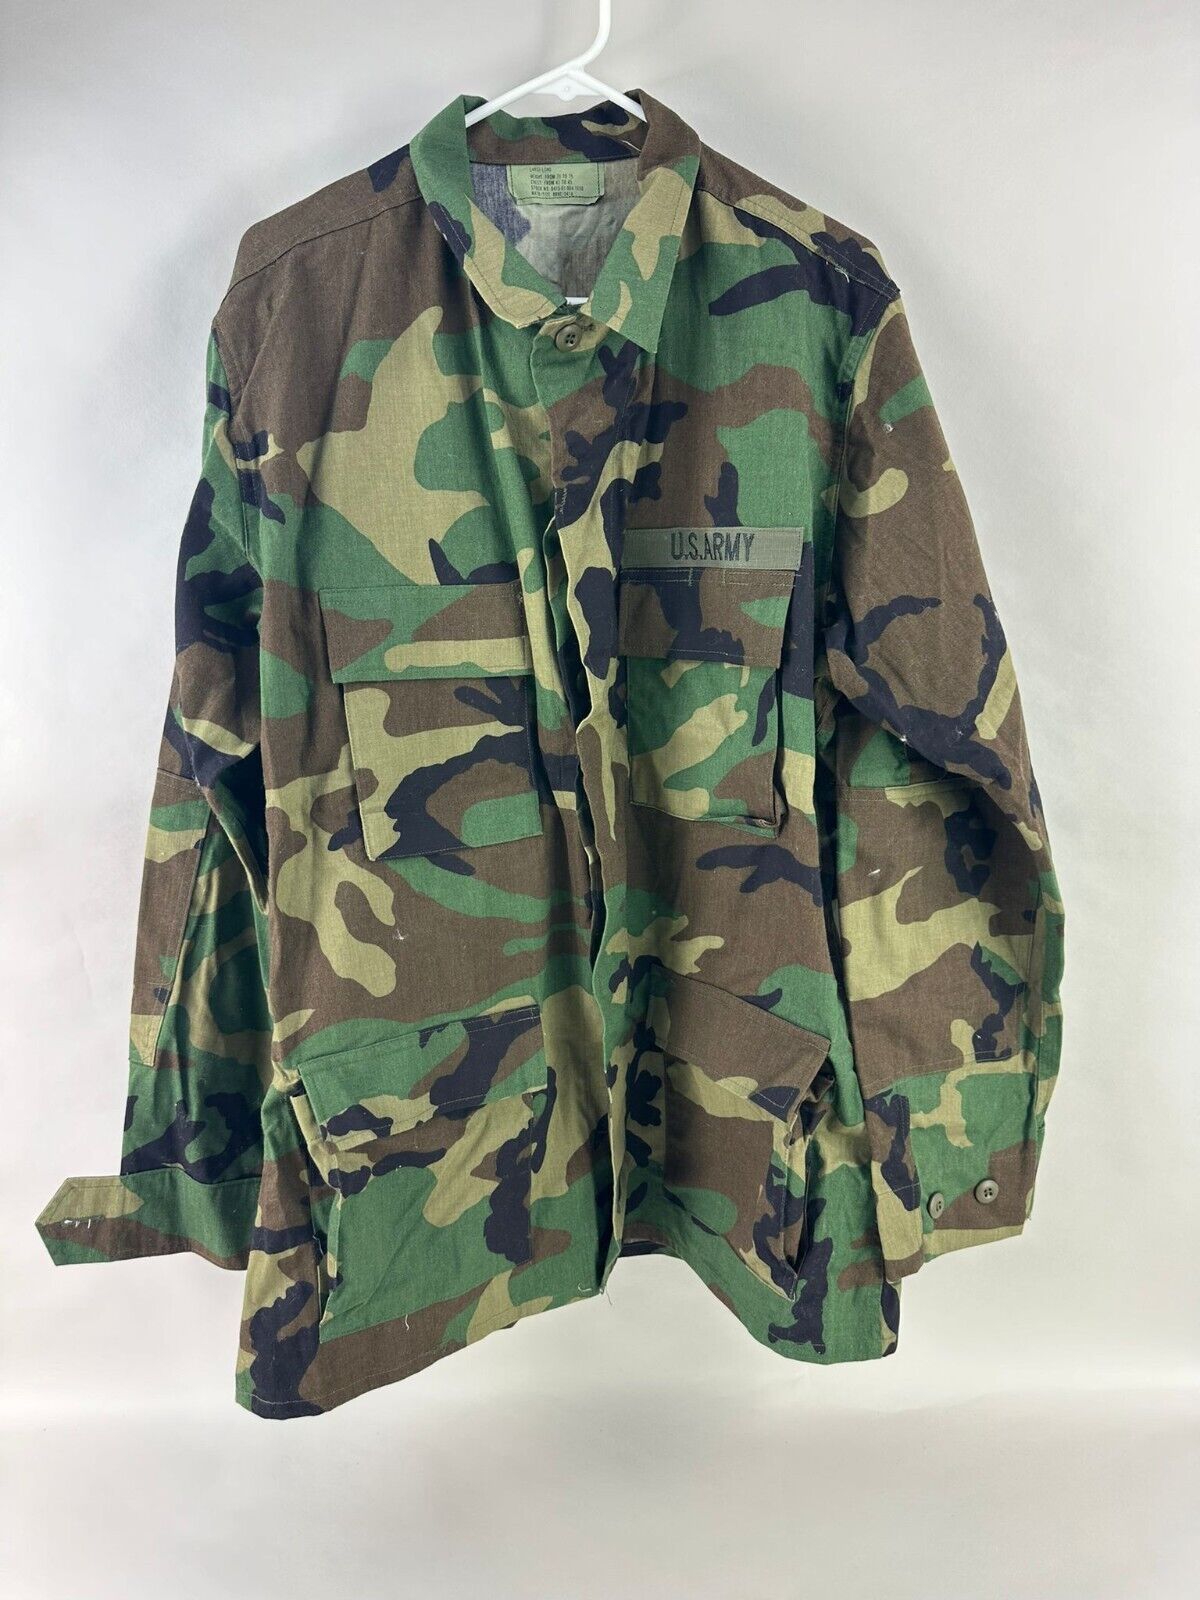 US Army Camo Combat Jacket Woodland Size Large Long Button Up